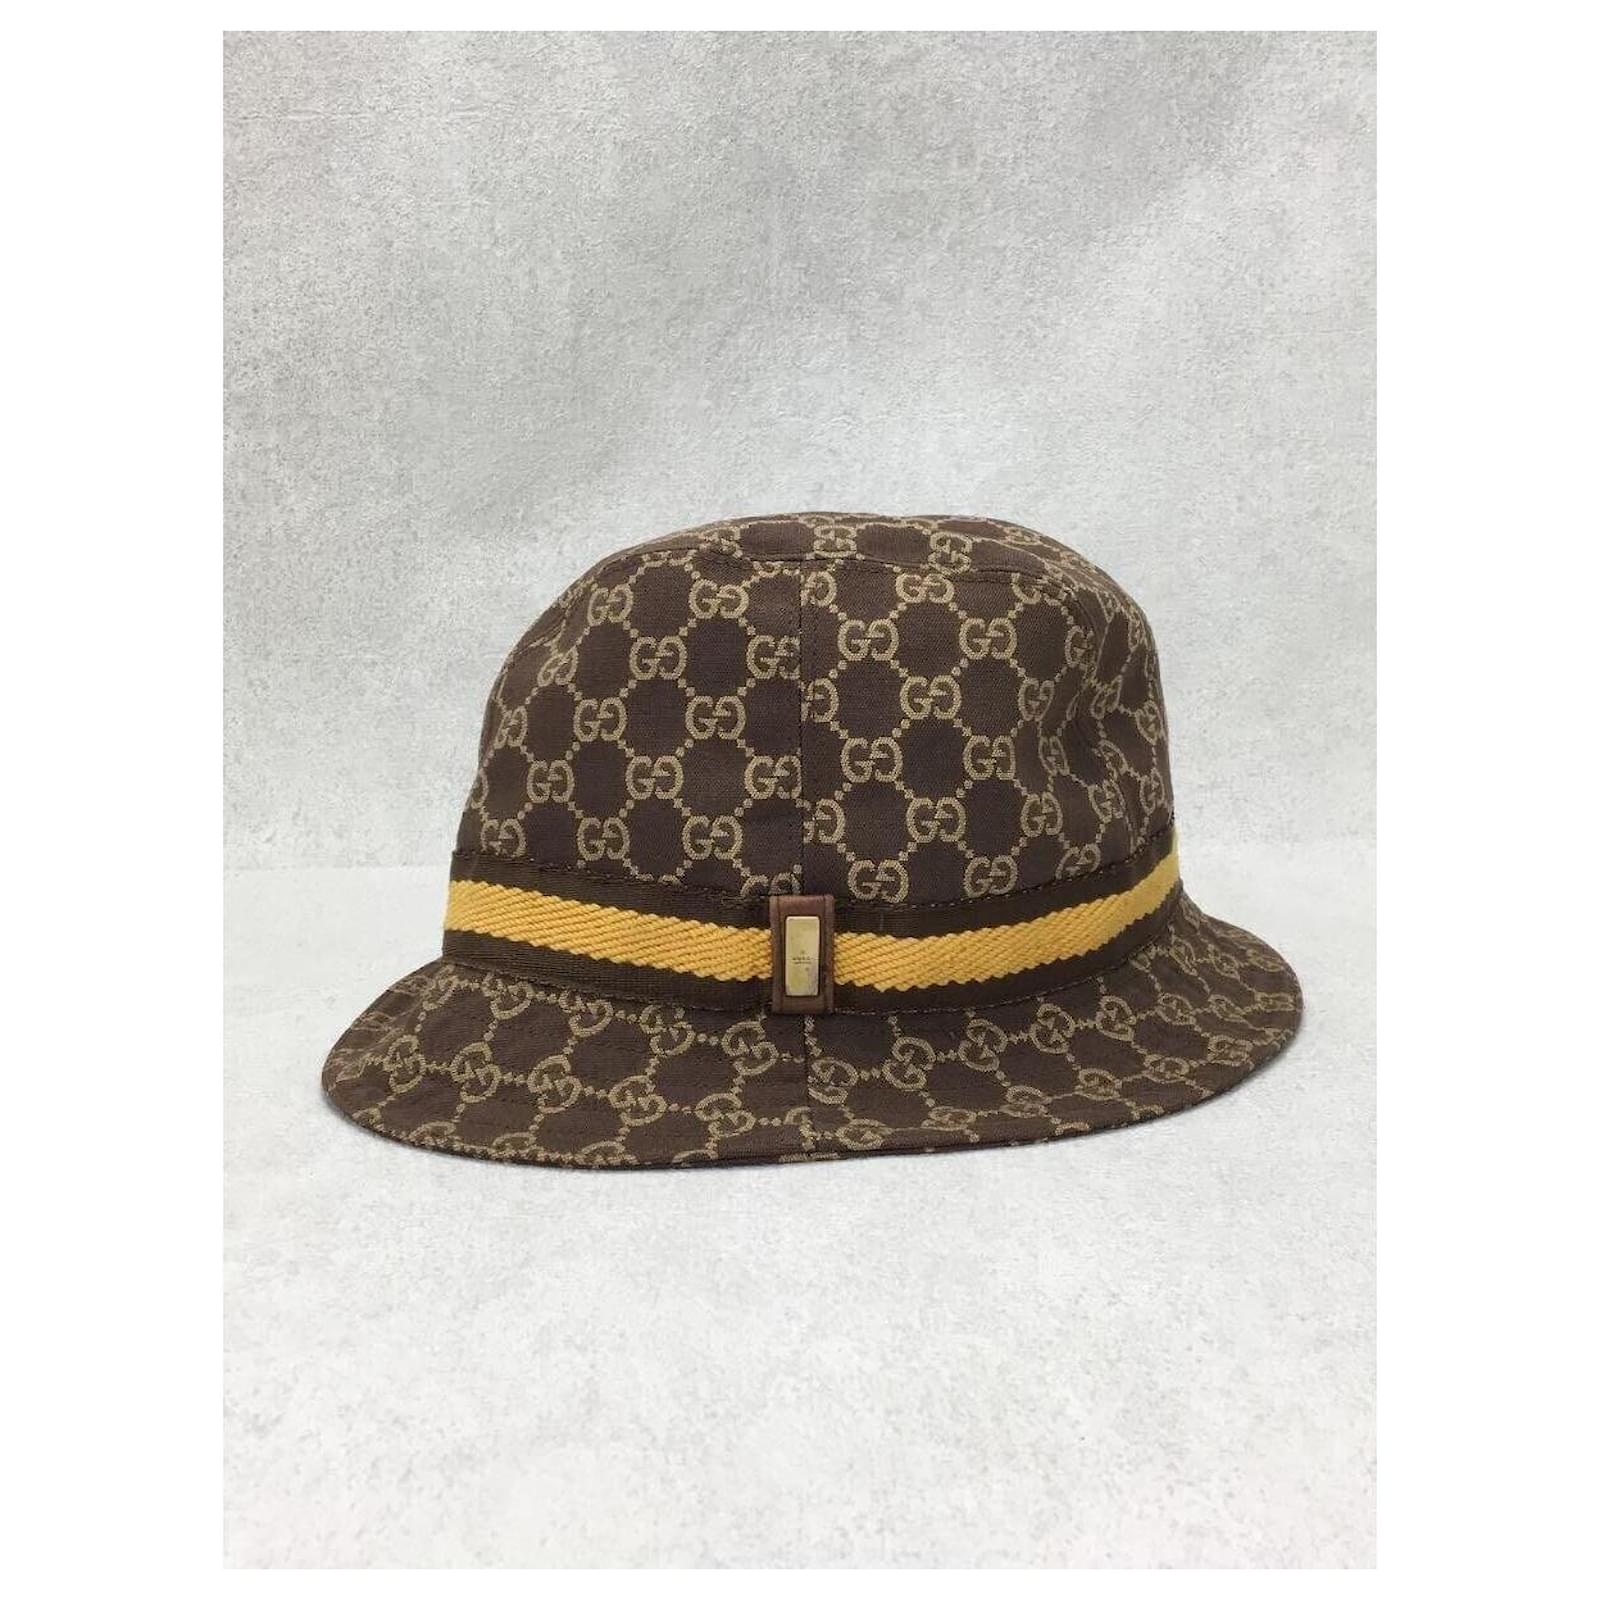 GUCCI hat chapeau M size 58cm 7339854HAN4 M cotton polyester Gray